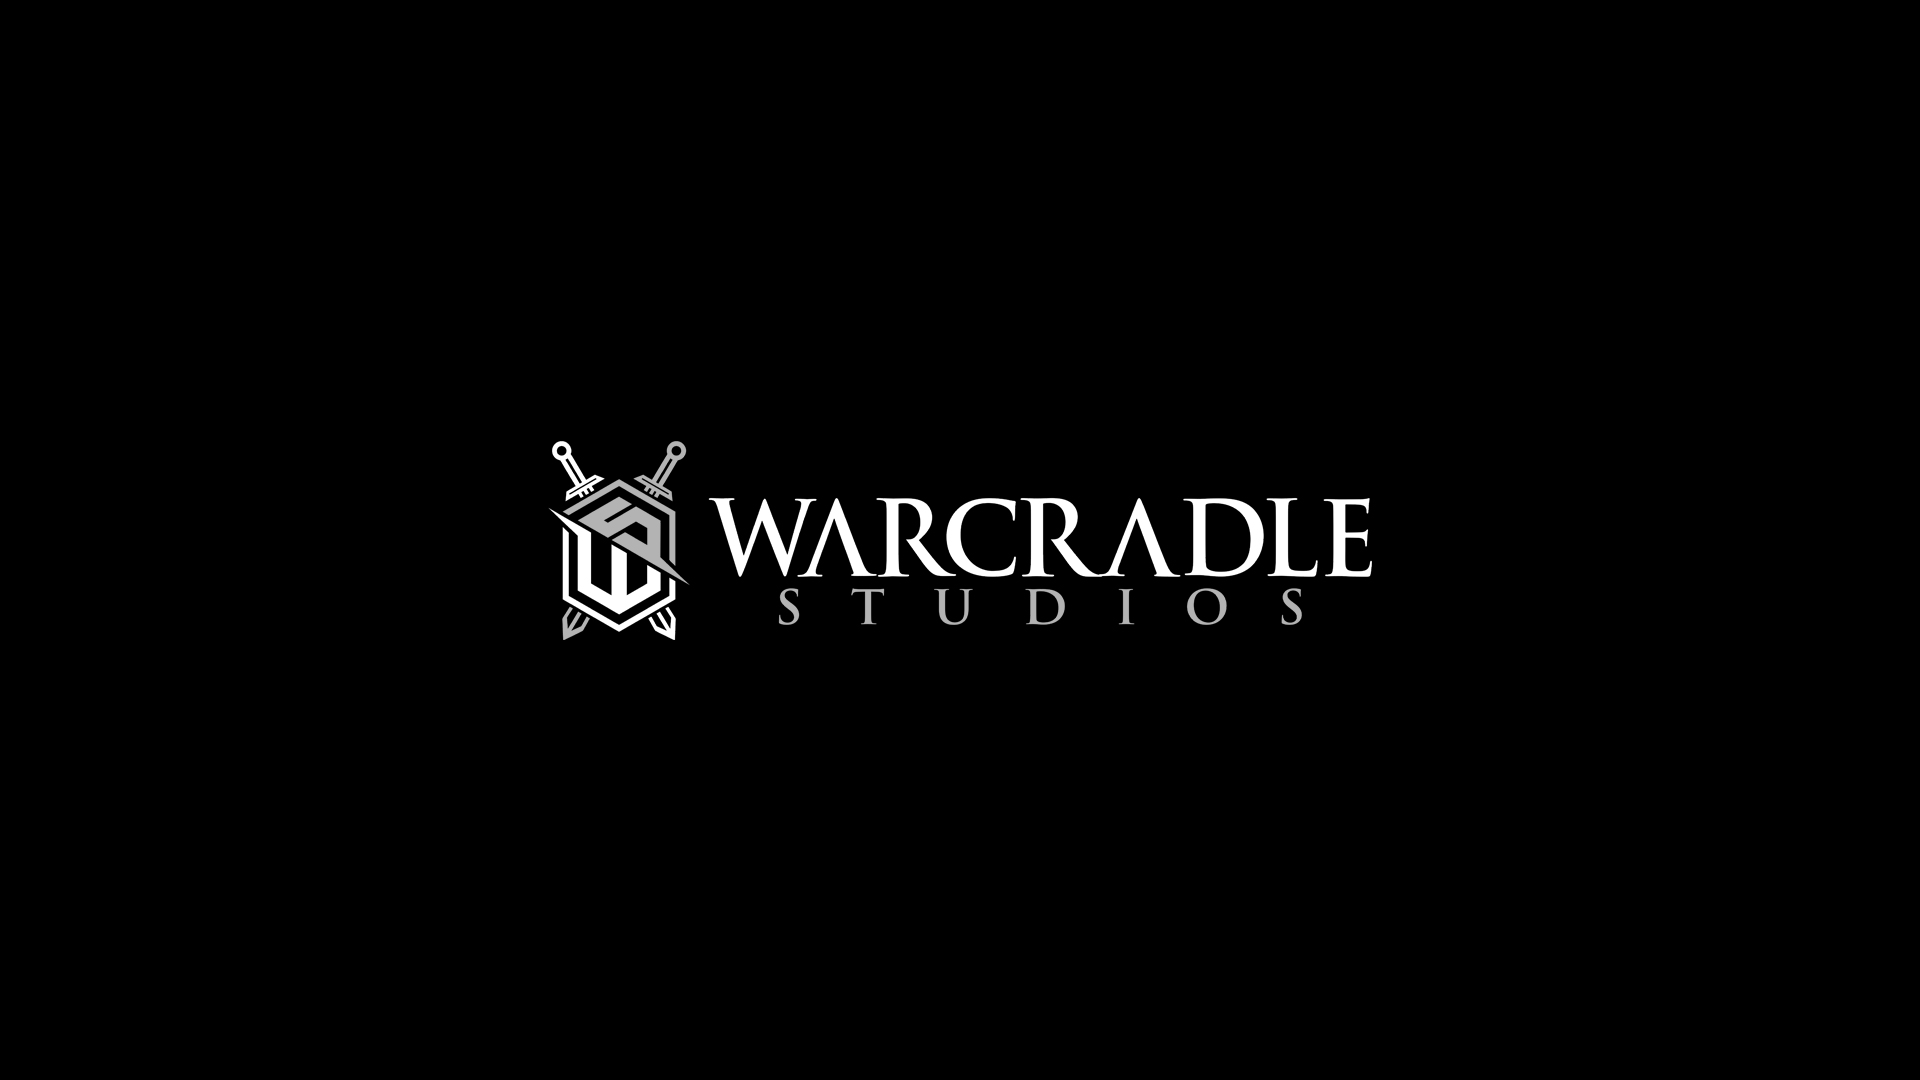 Warcradle Studios Acquires The Dystopian And Firestorm Settings